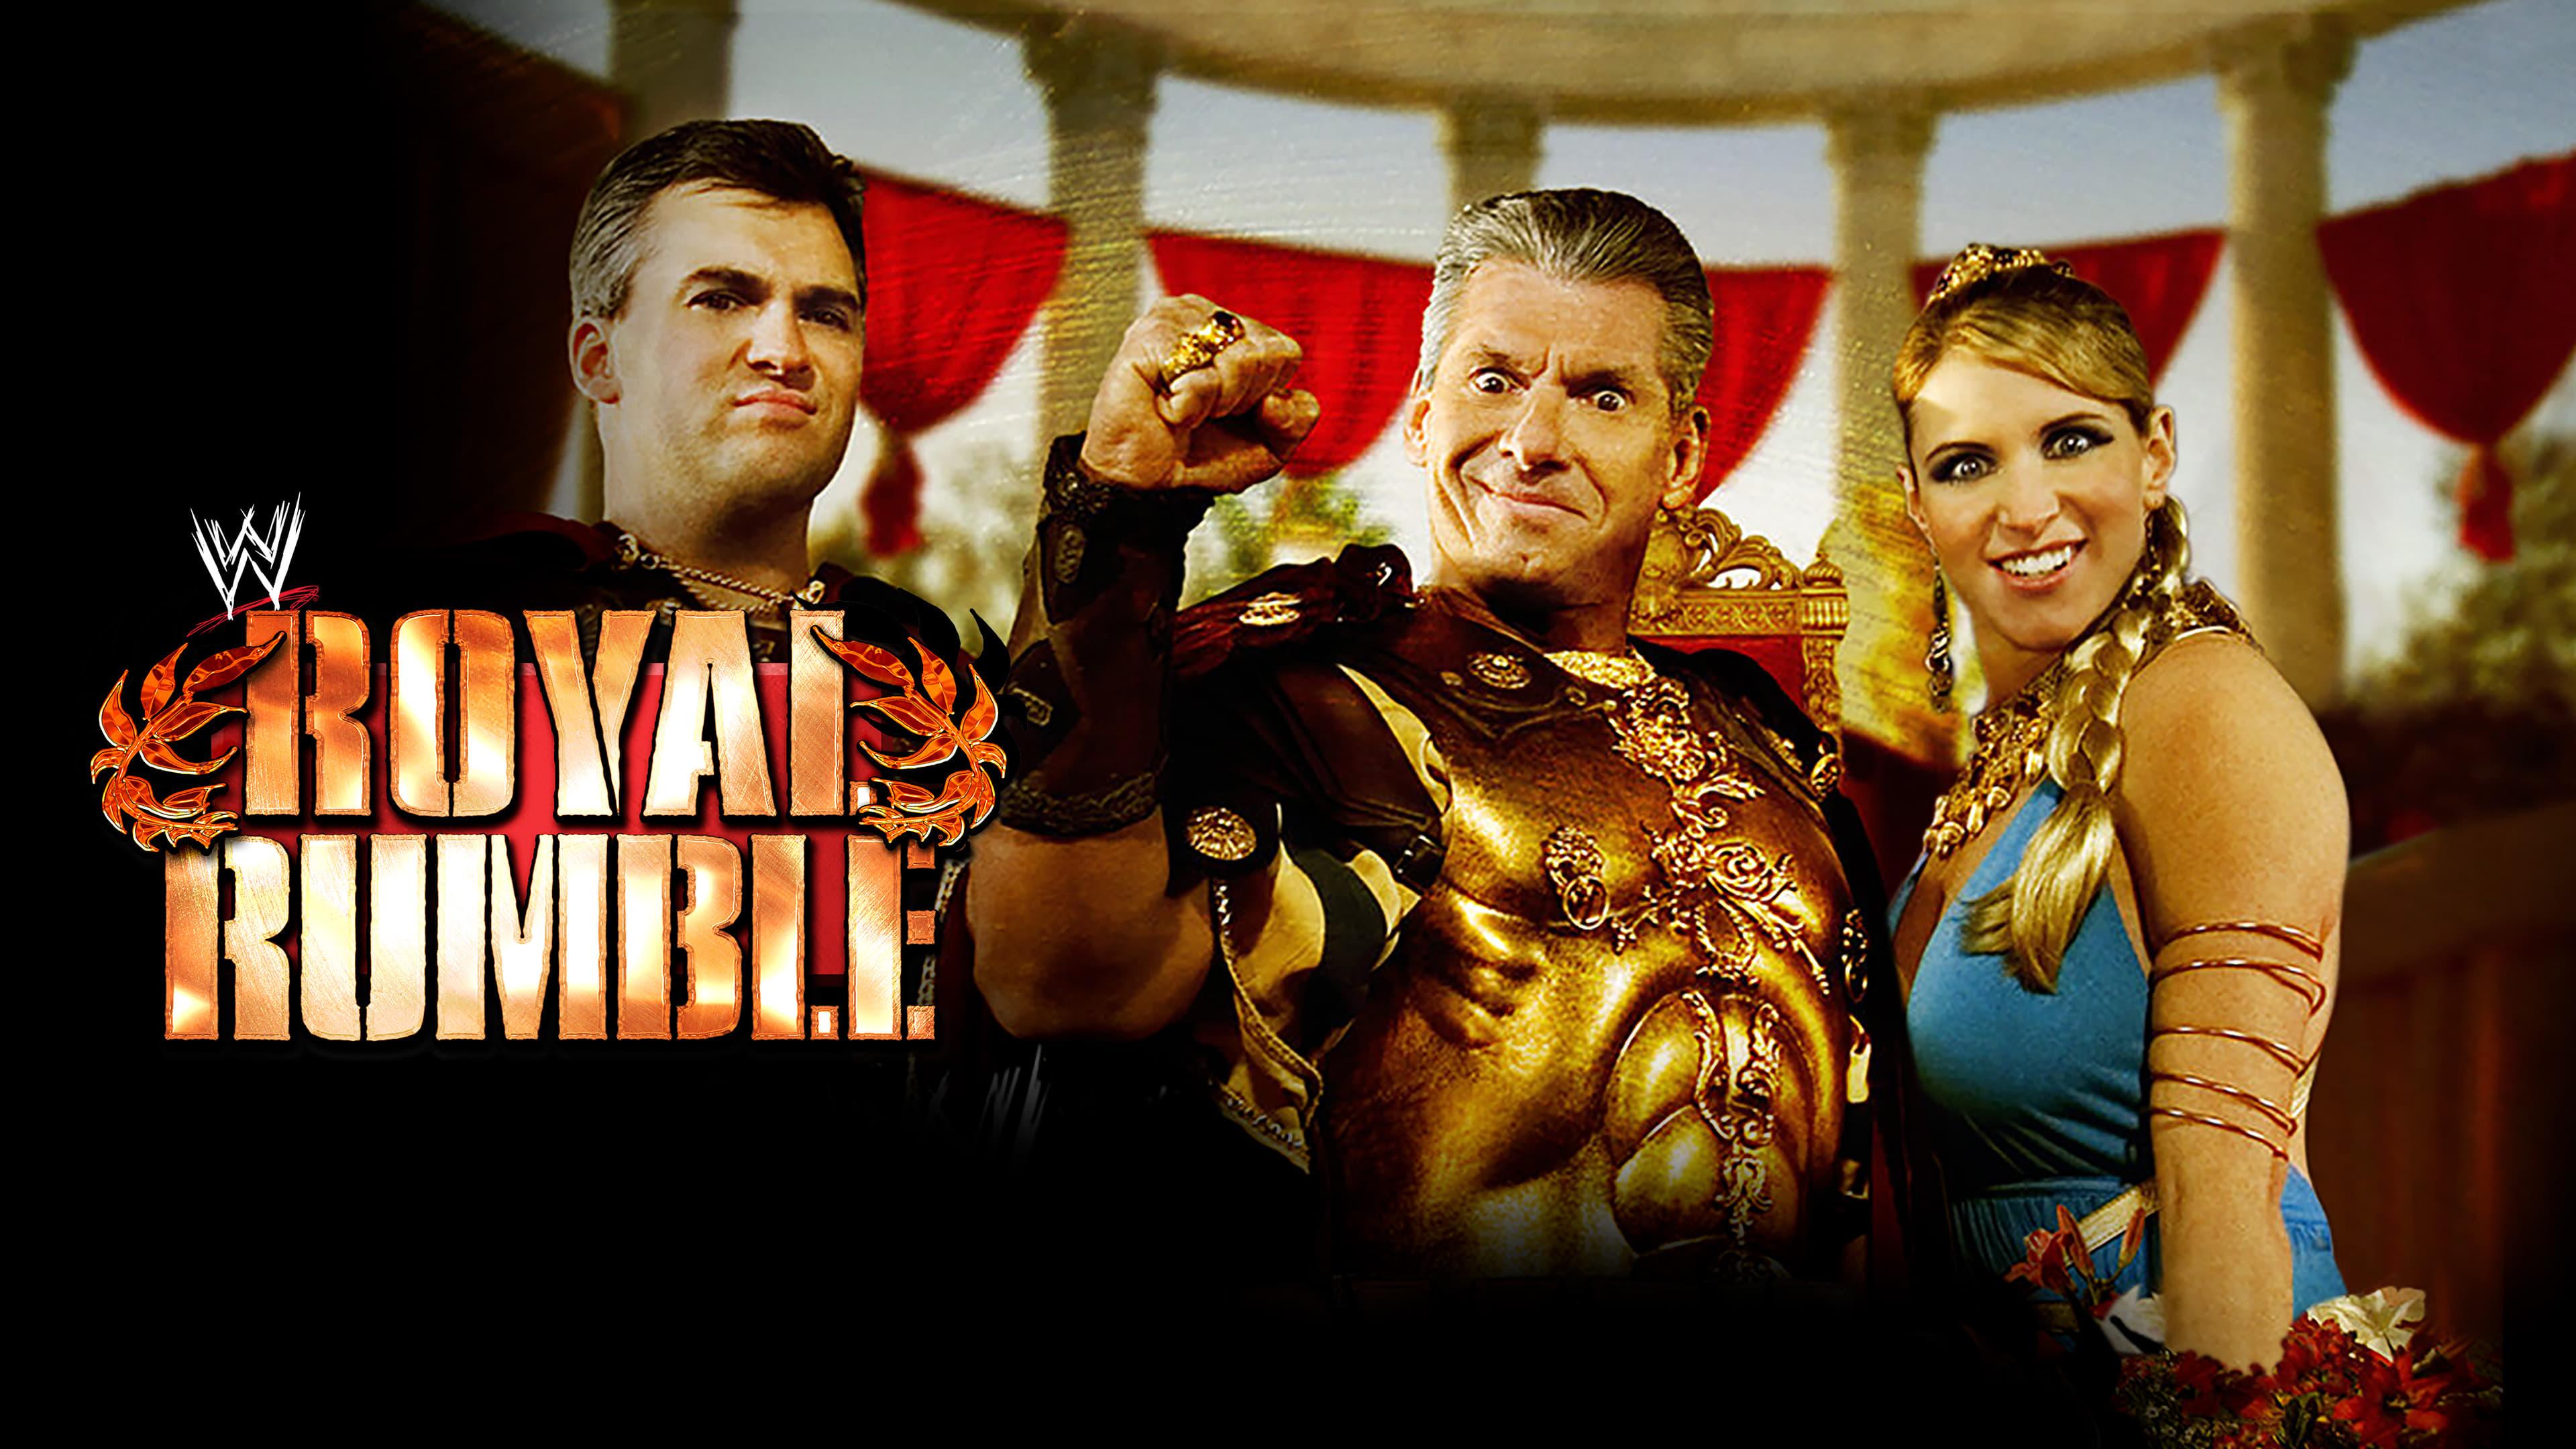 WWE Royal Rumble 2006 backdrop